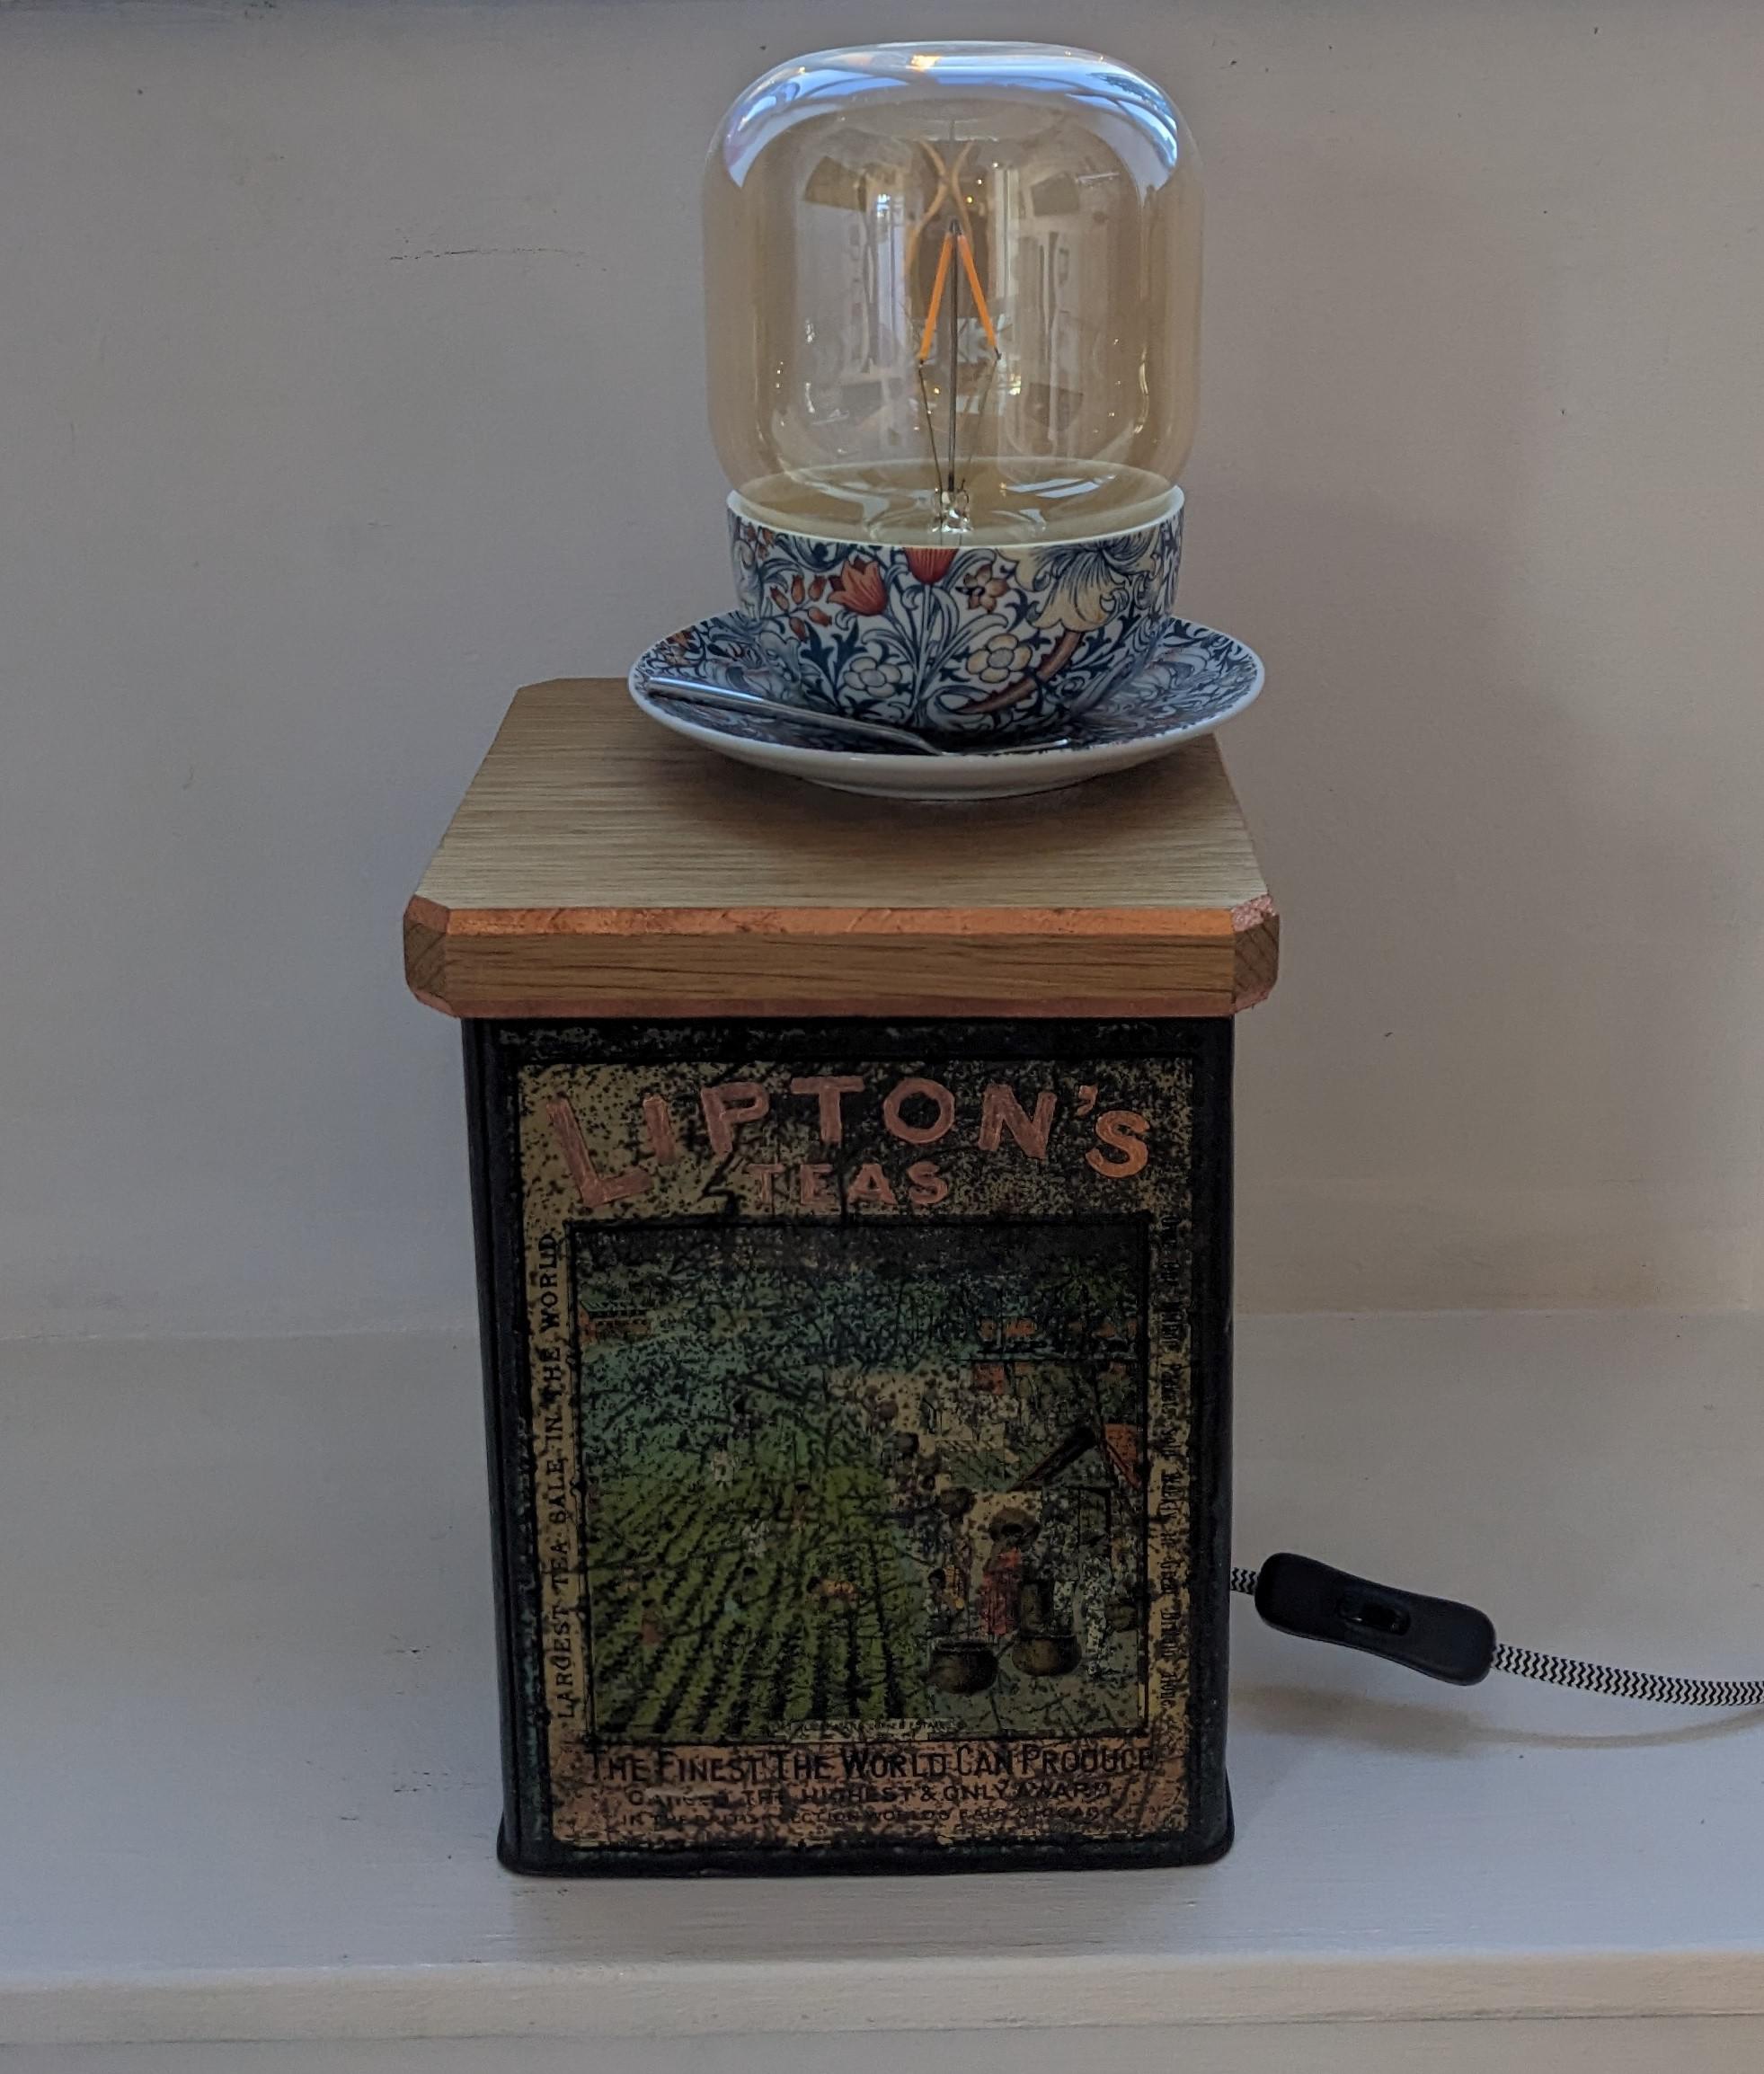 Liptons Lamp